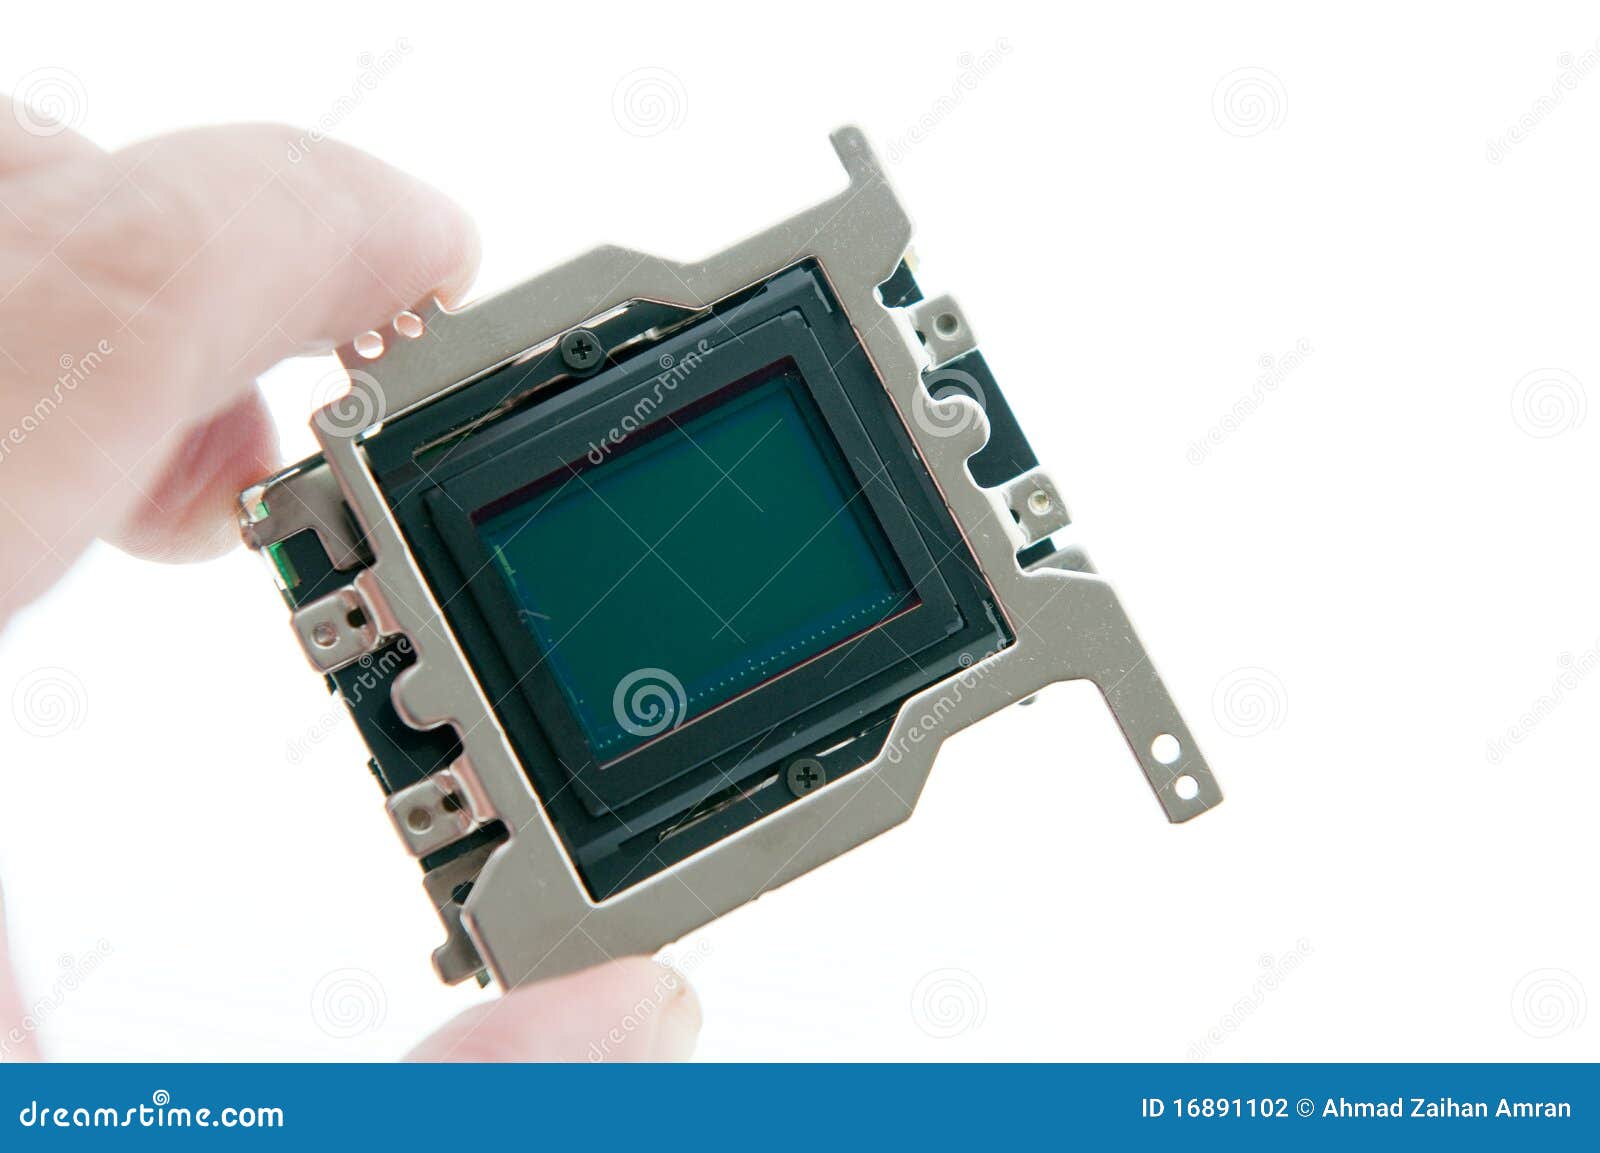 holding cmos sensor